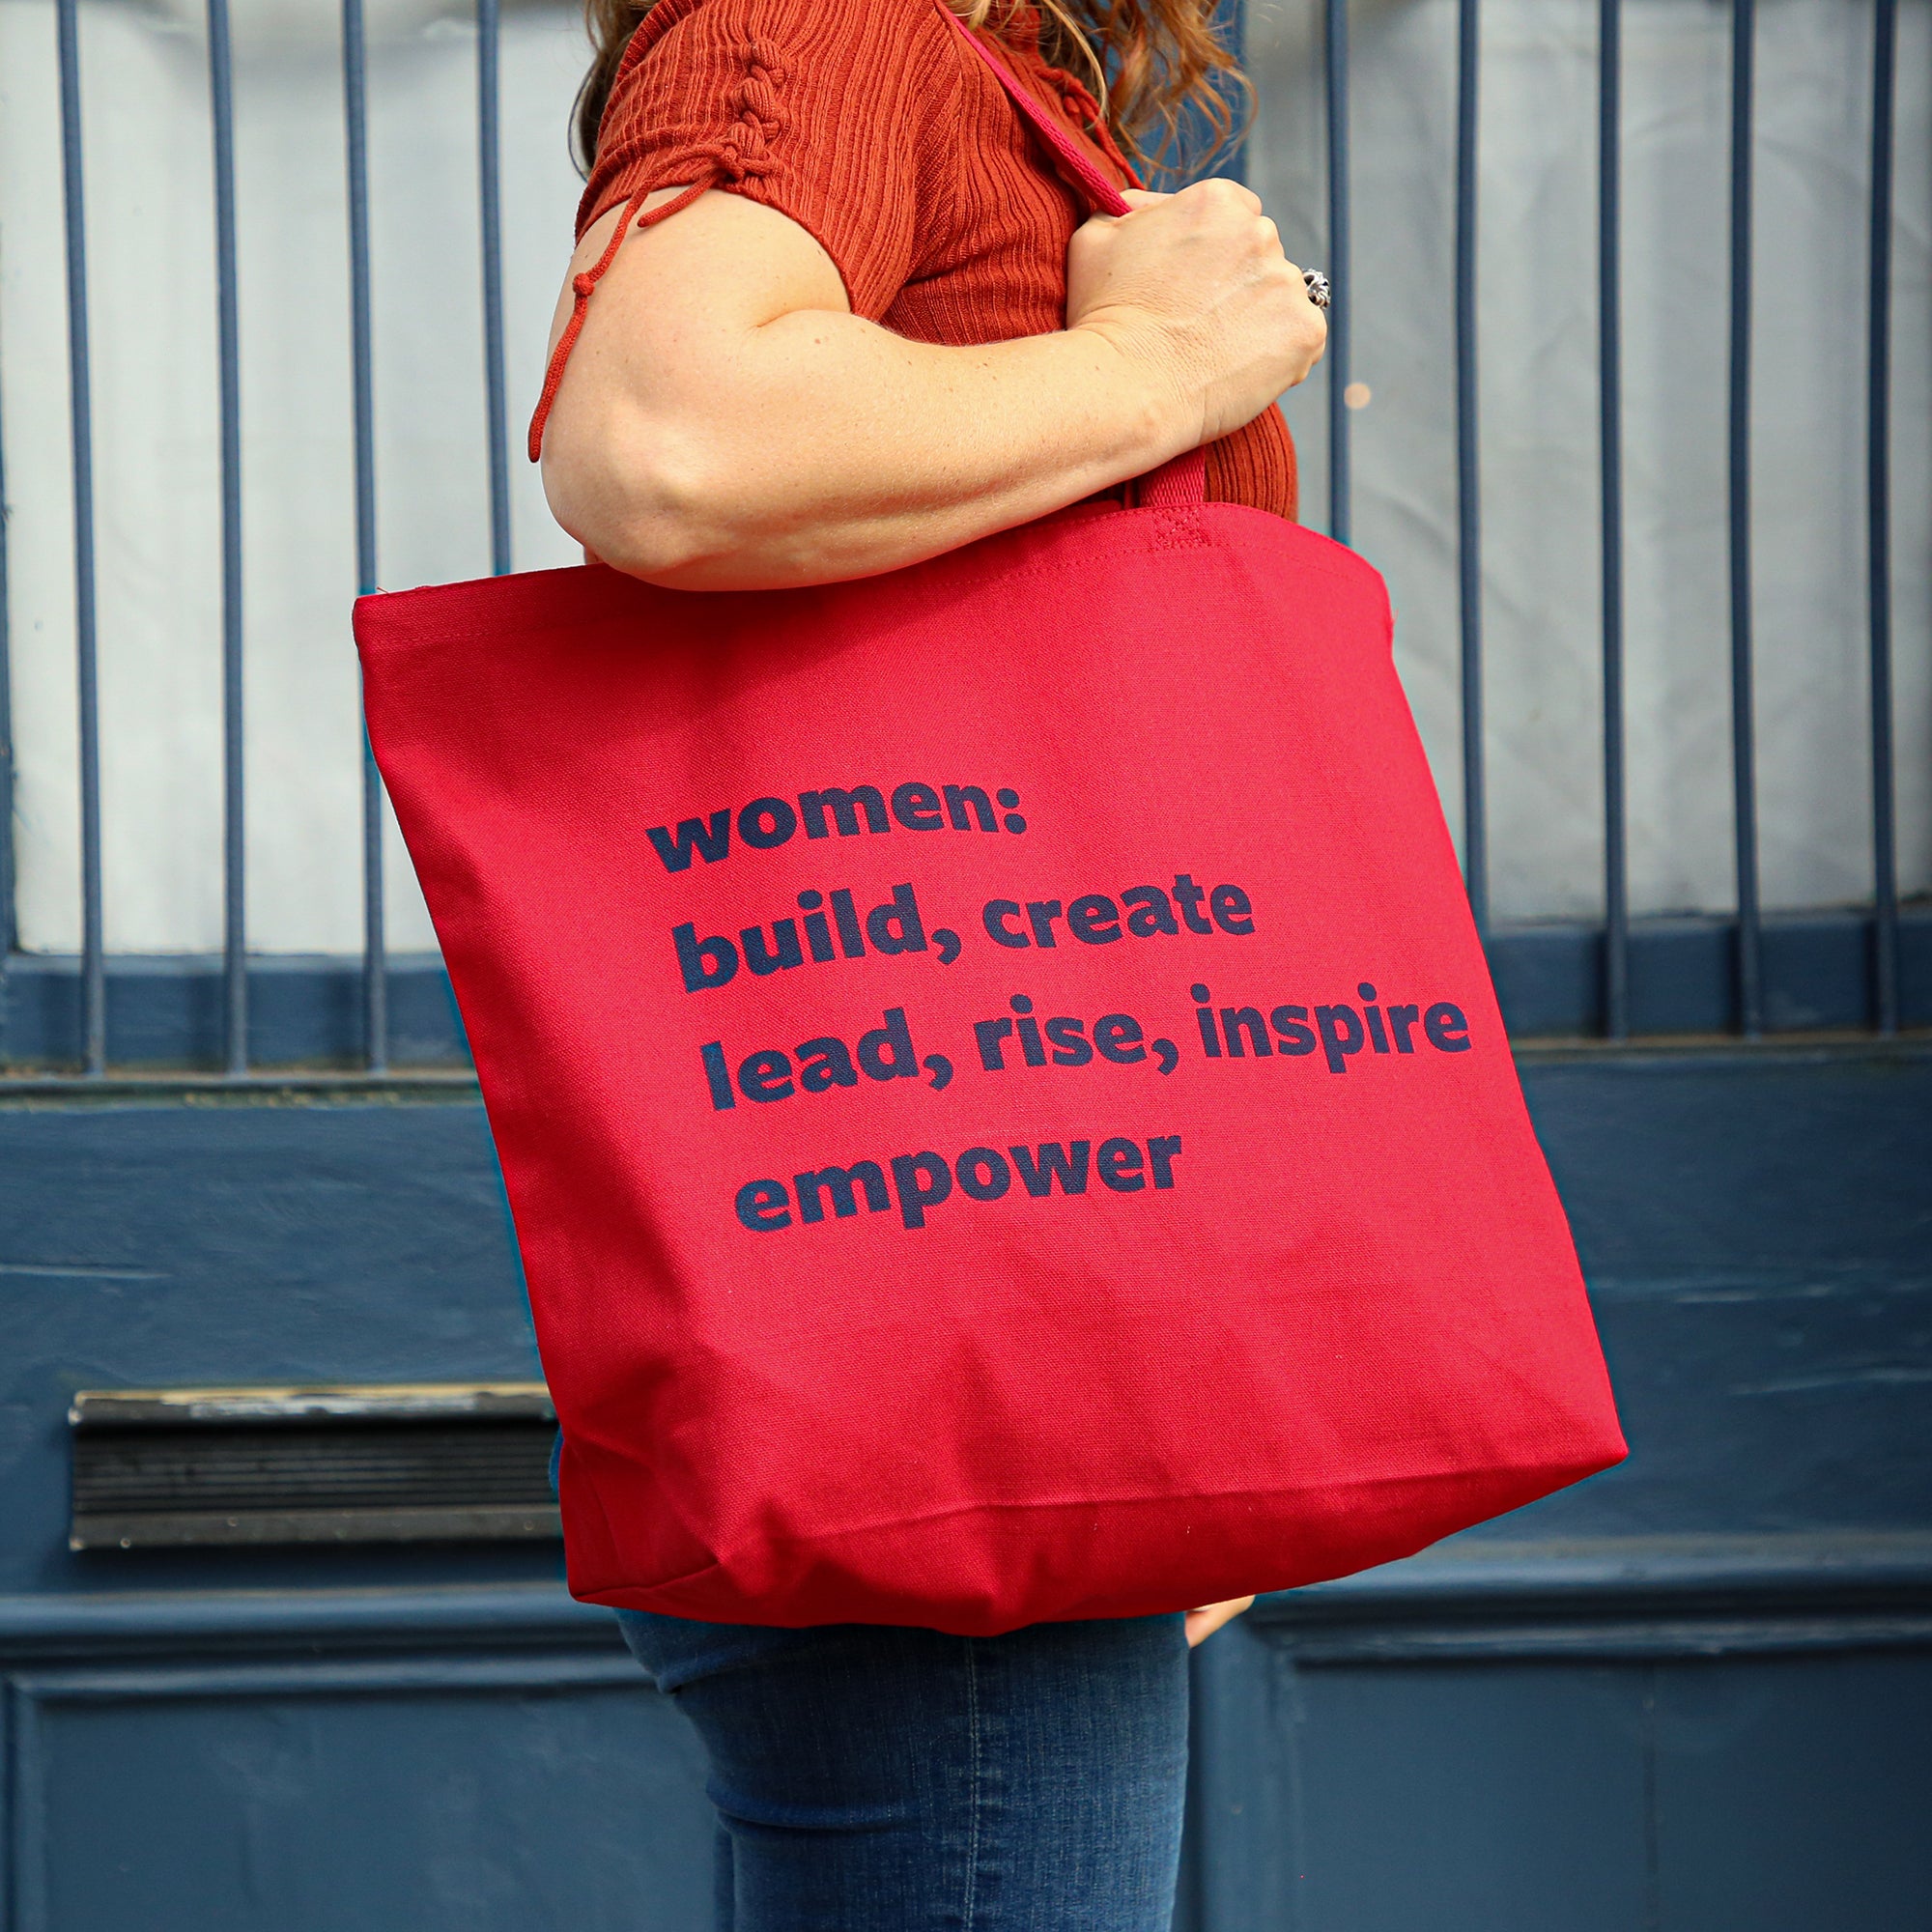 Women: Lead, Rise, Inspire, & Empower